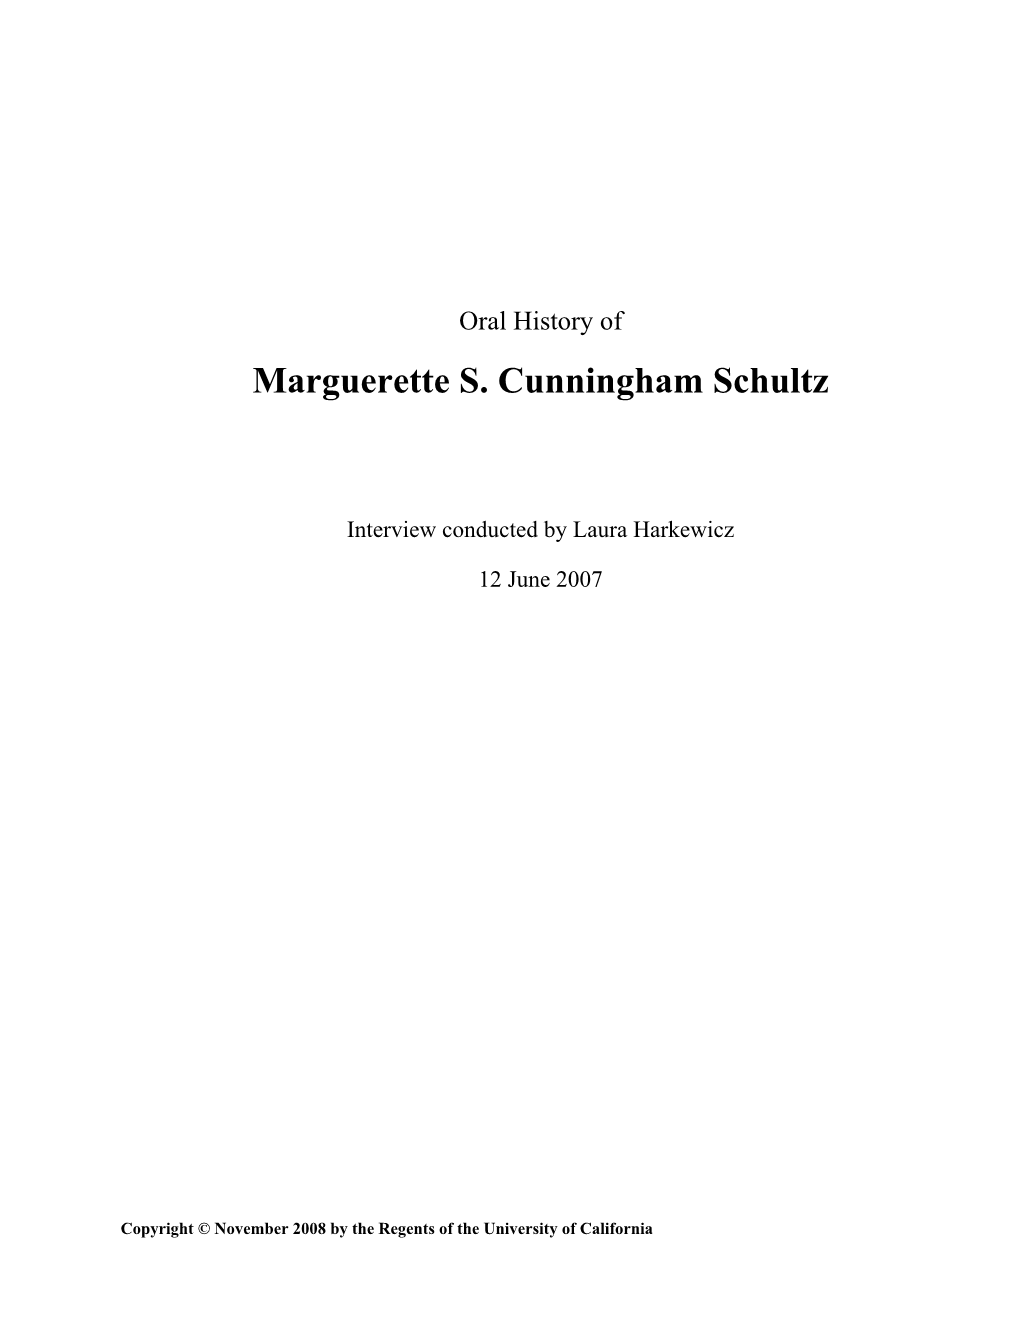 Marguerette Schultz Oral History